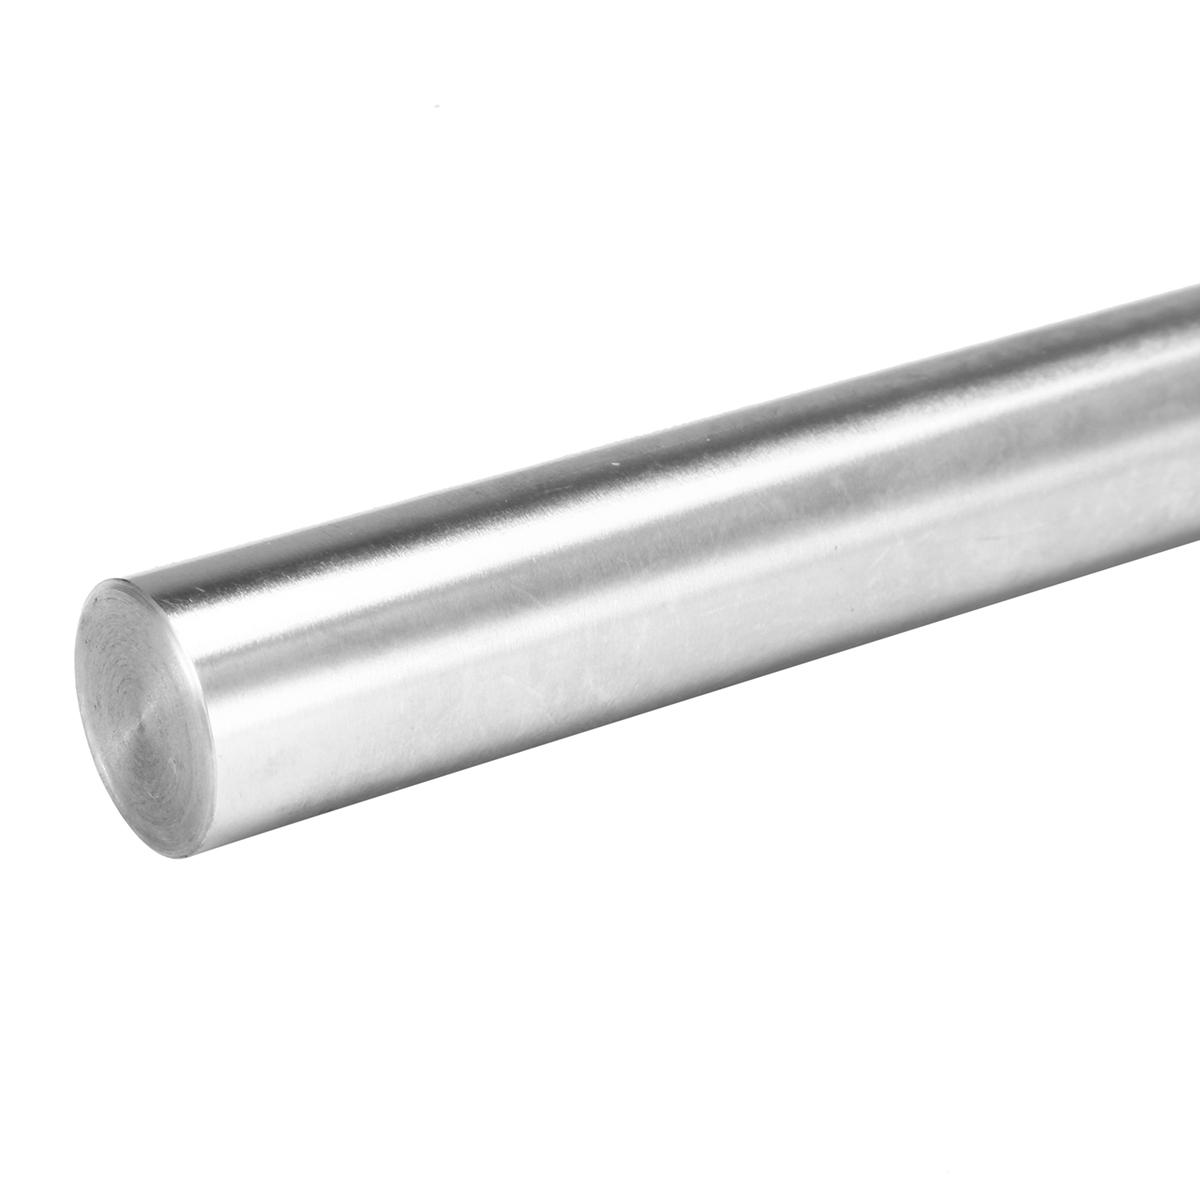 6mm/12mm 300mm Length Axis Chromed Smooth Rod Steel Linear Rail Shaft for 3D Printer 28